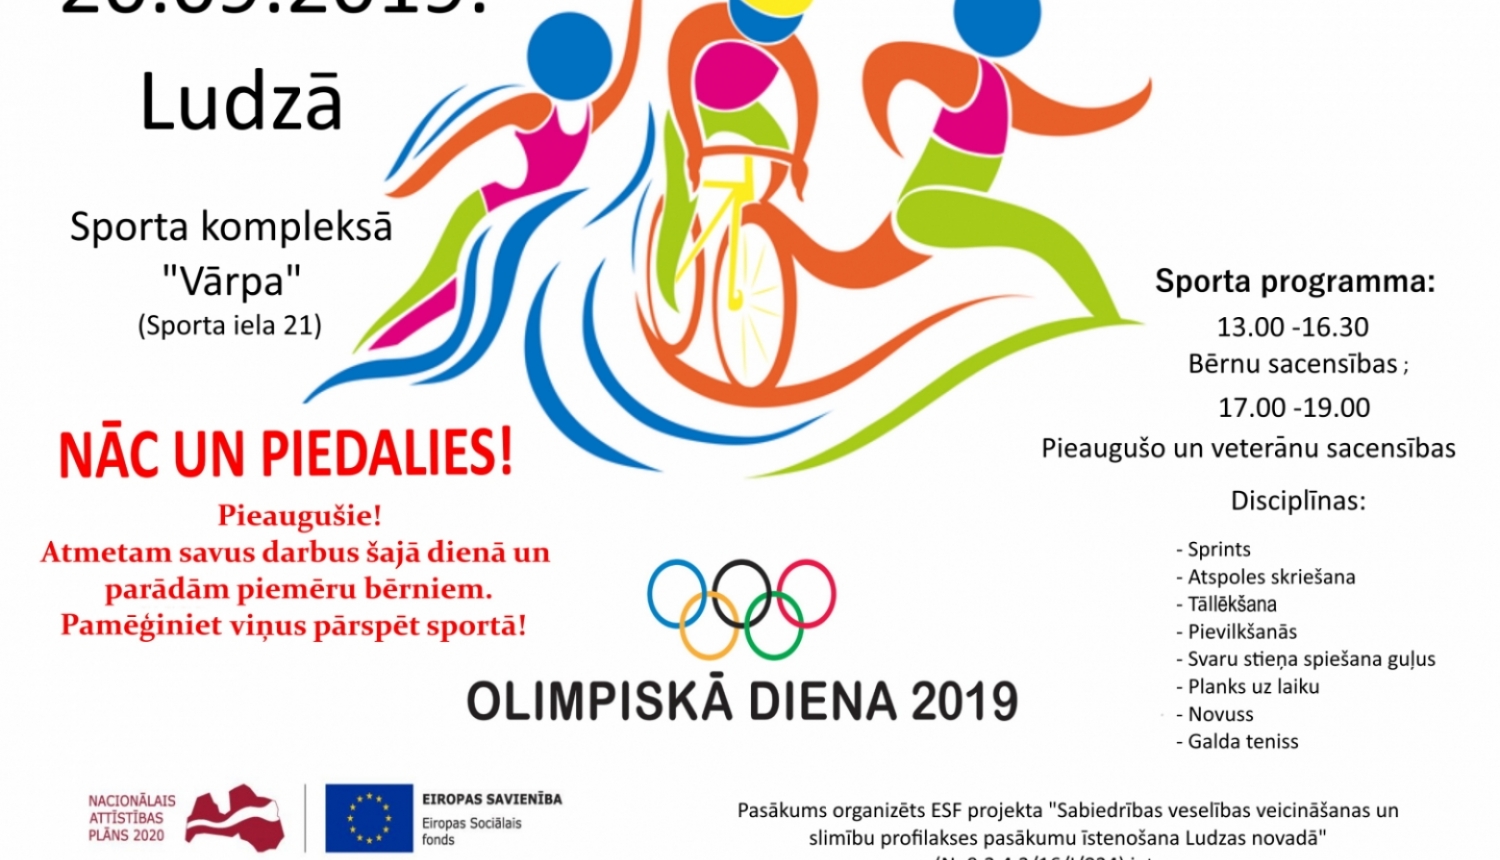 olimpiska-diena-2019-ludza-3.jpg